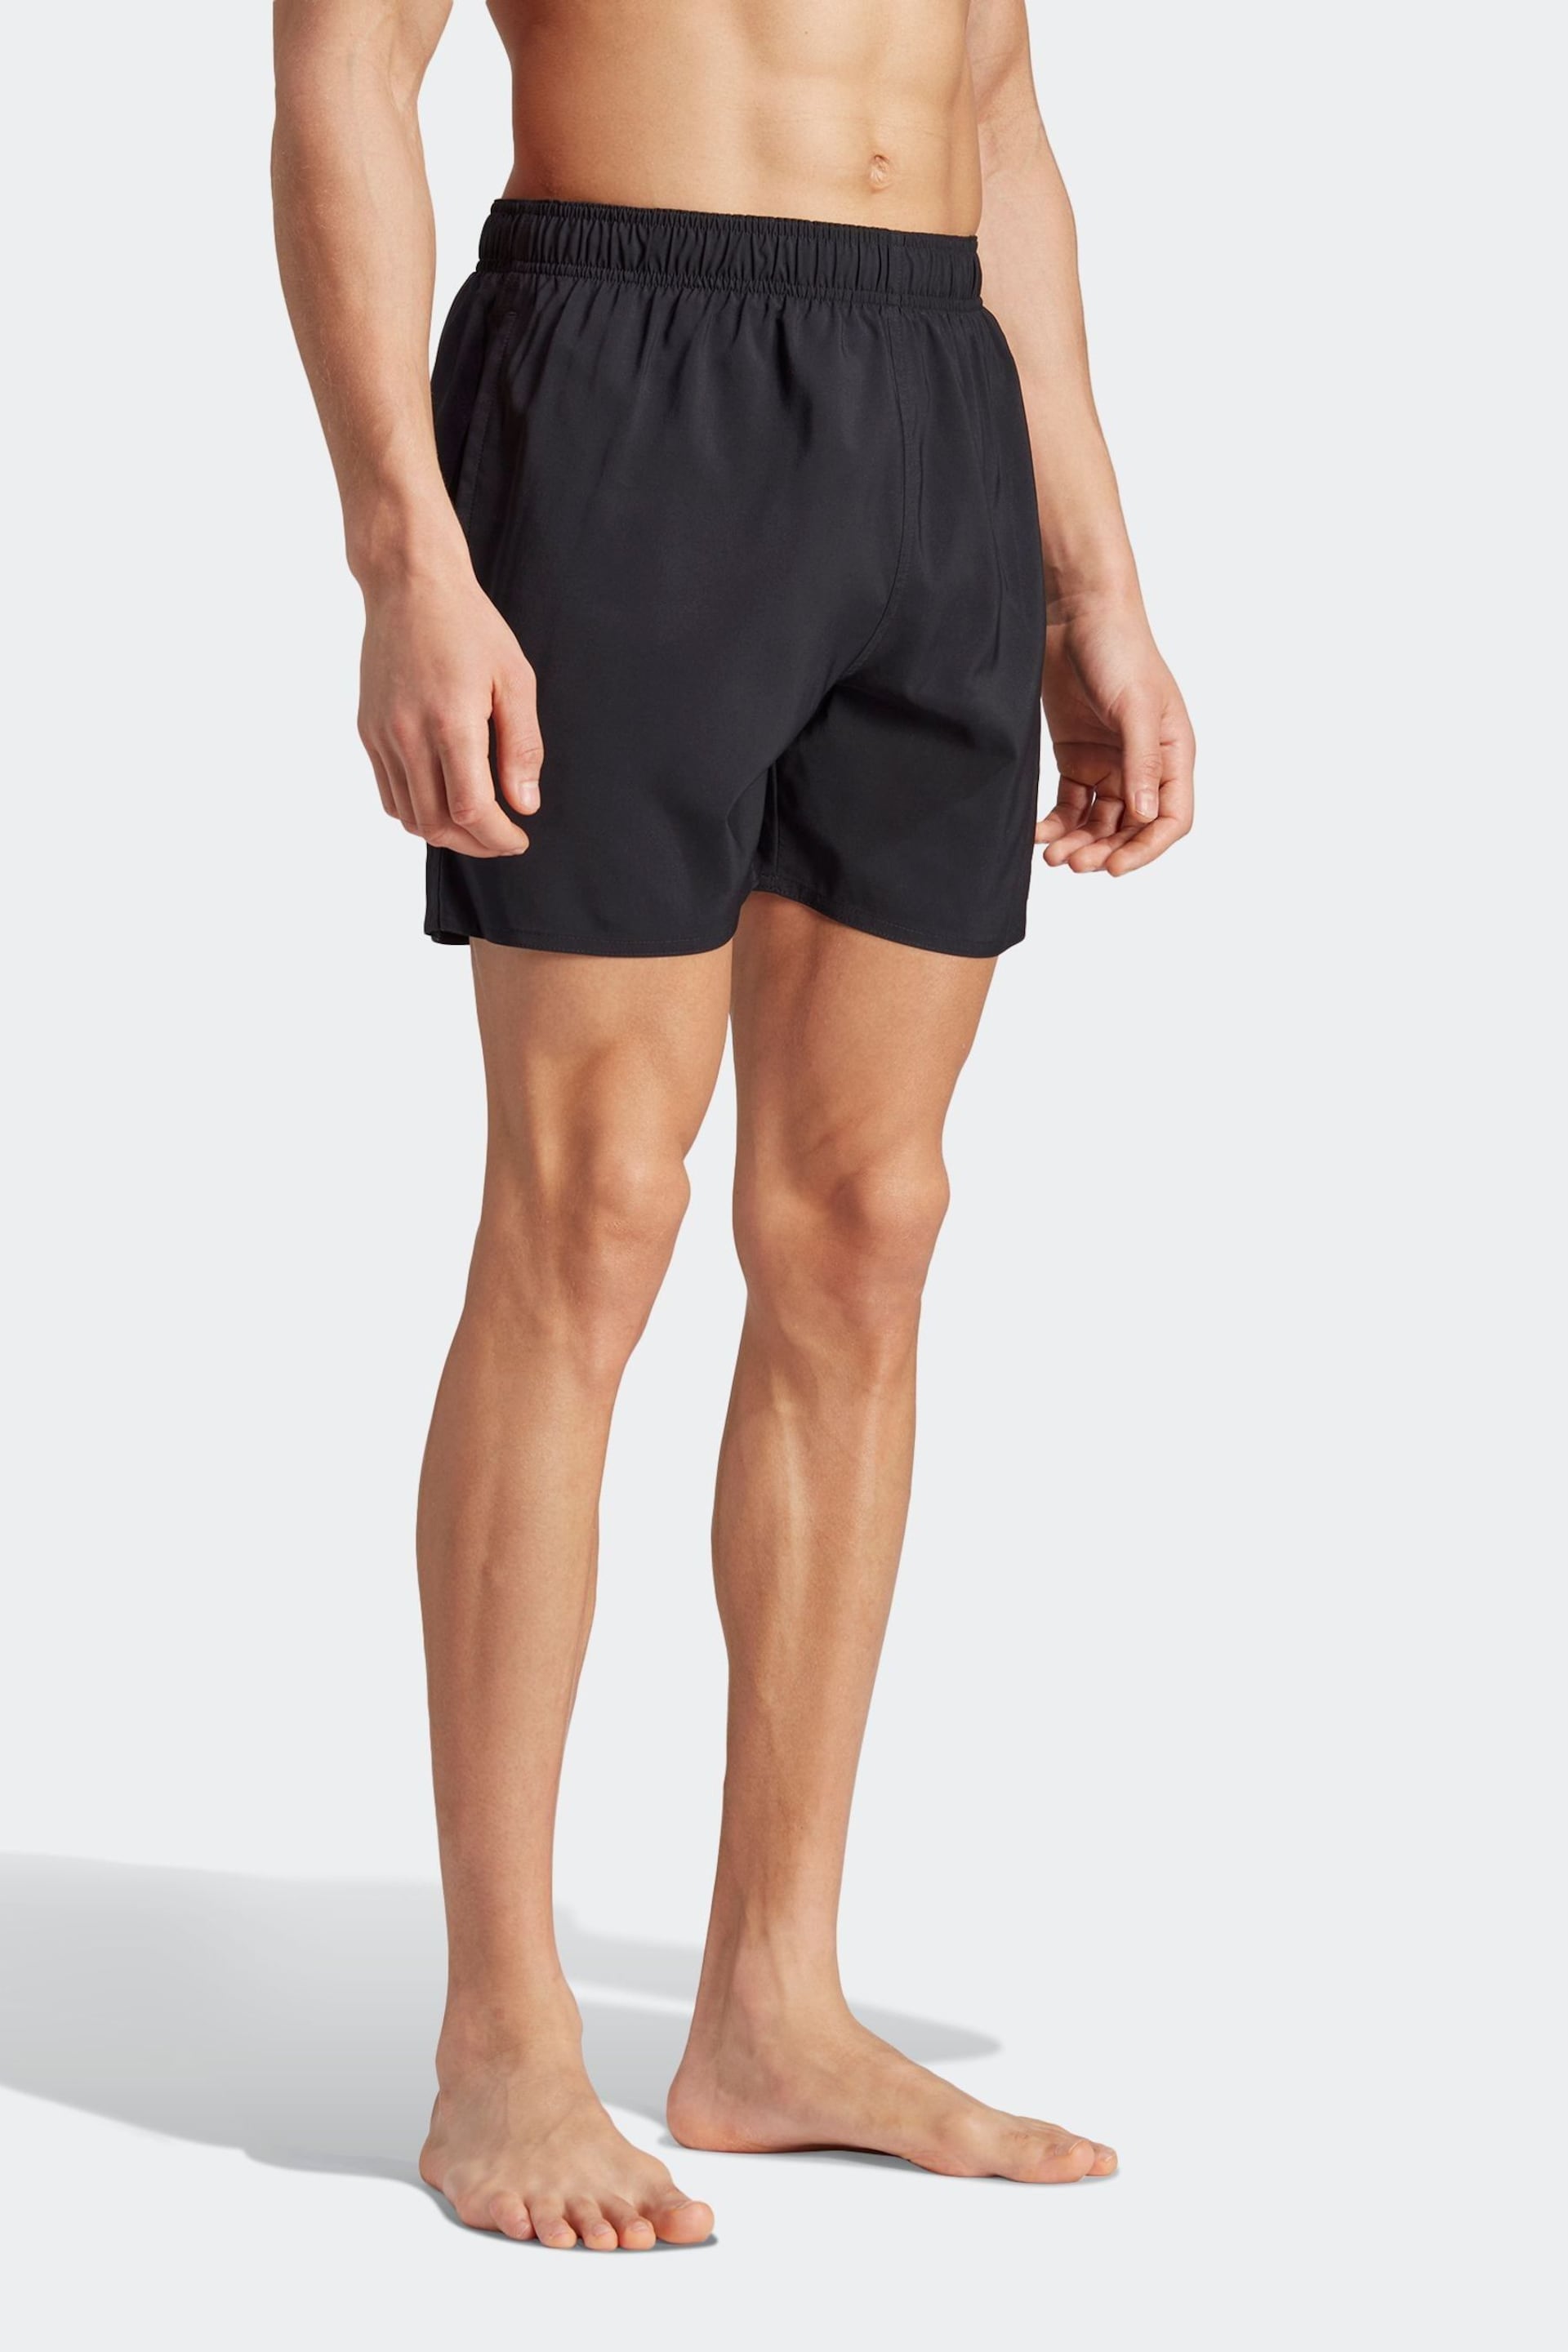 adidas Dark Black Solid CLX Short Length Swim Shorts - Image 5 of 9